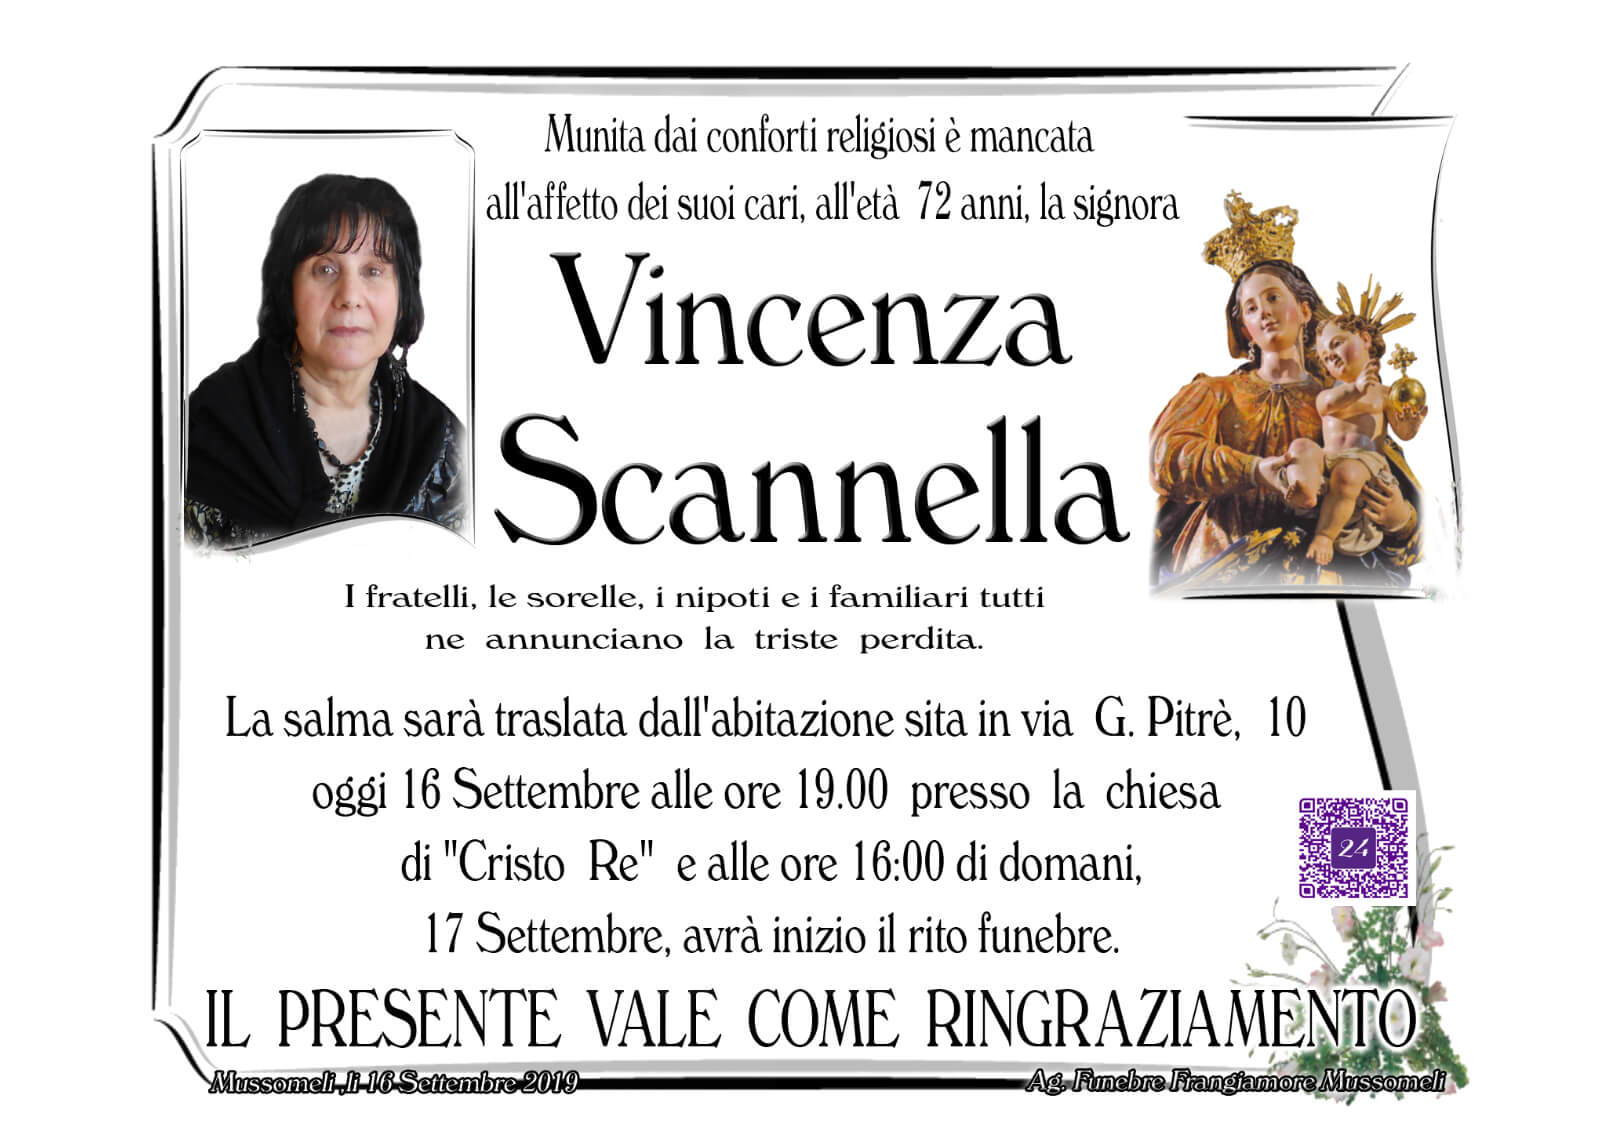 Vincenza Scannella